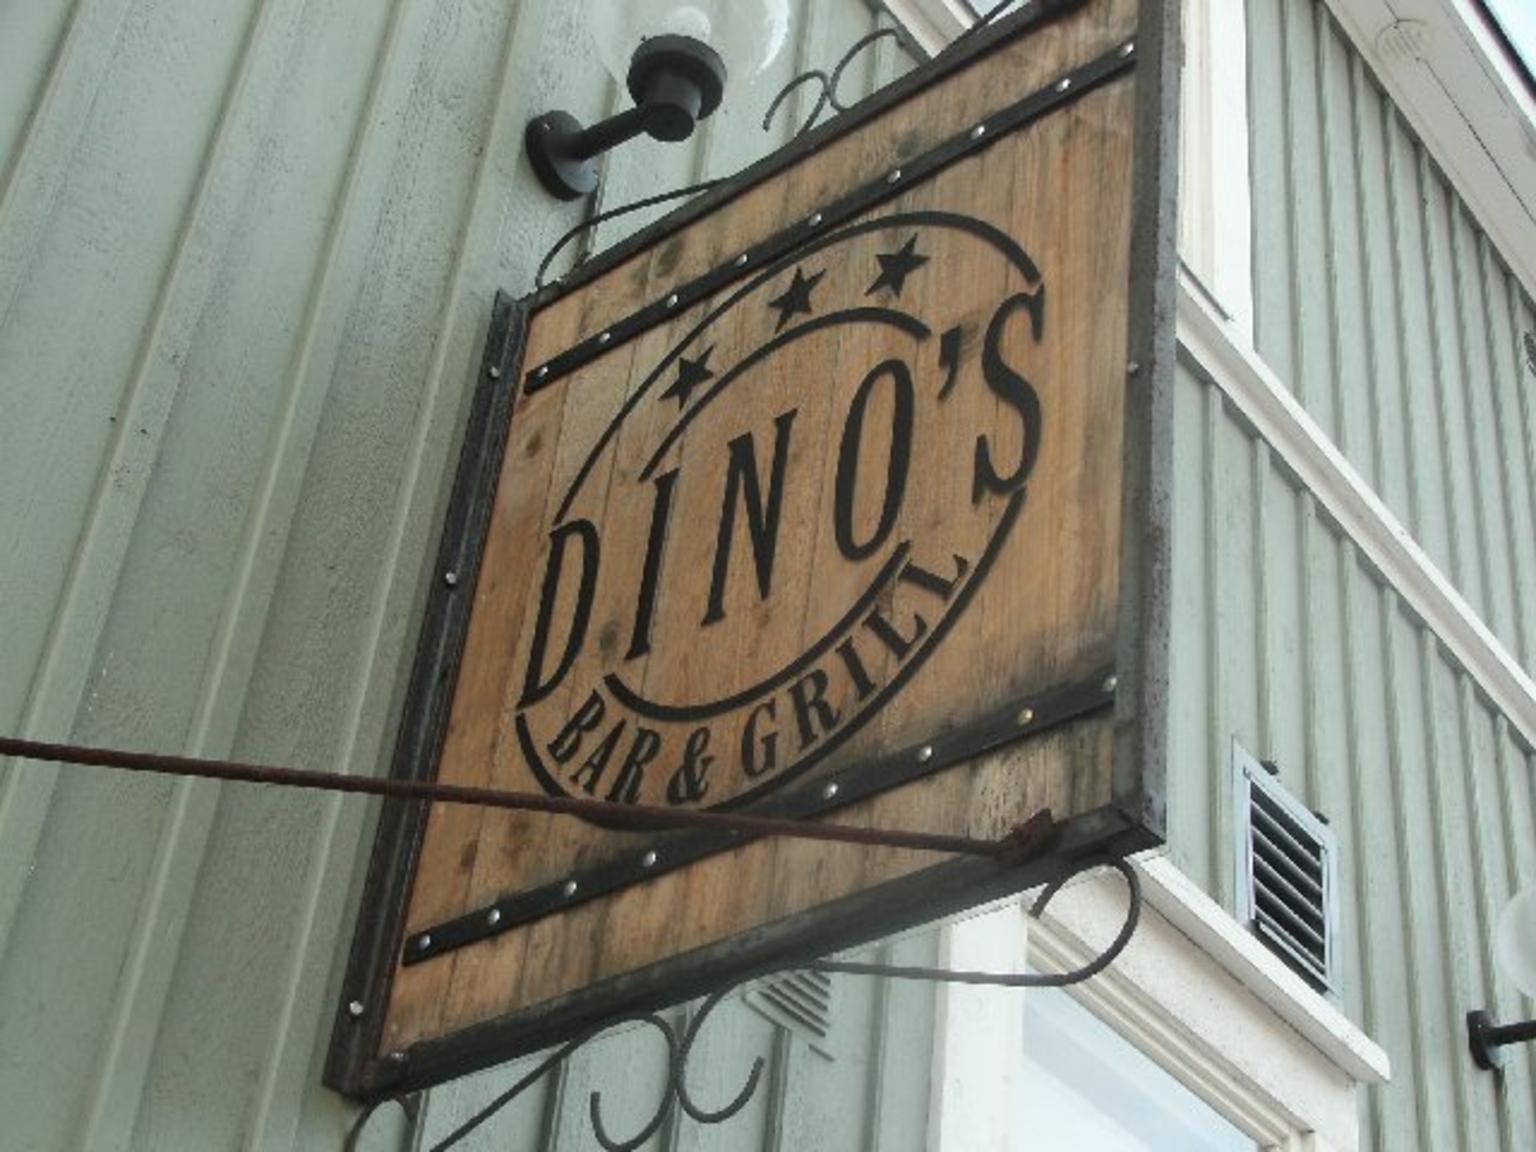 Dino’s Bar & Grill